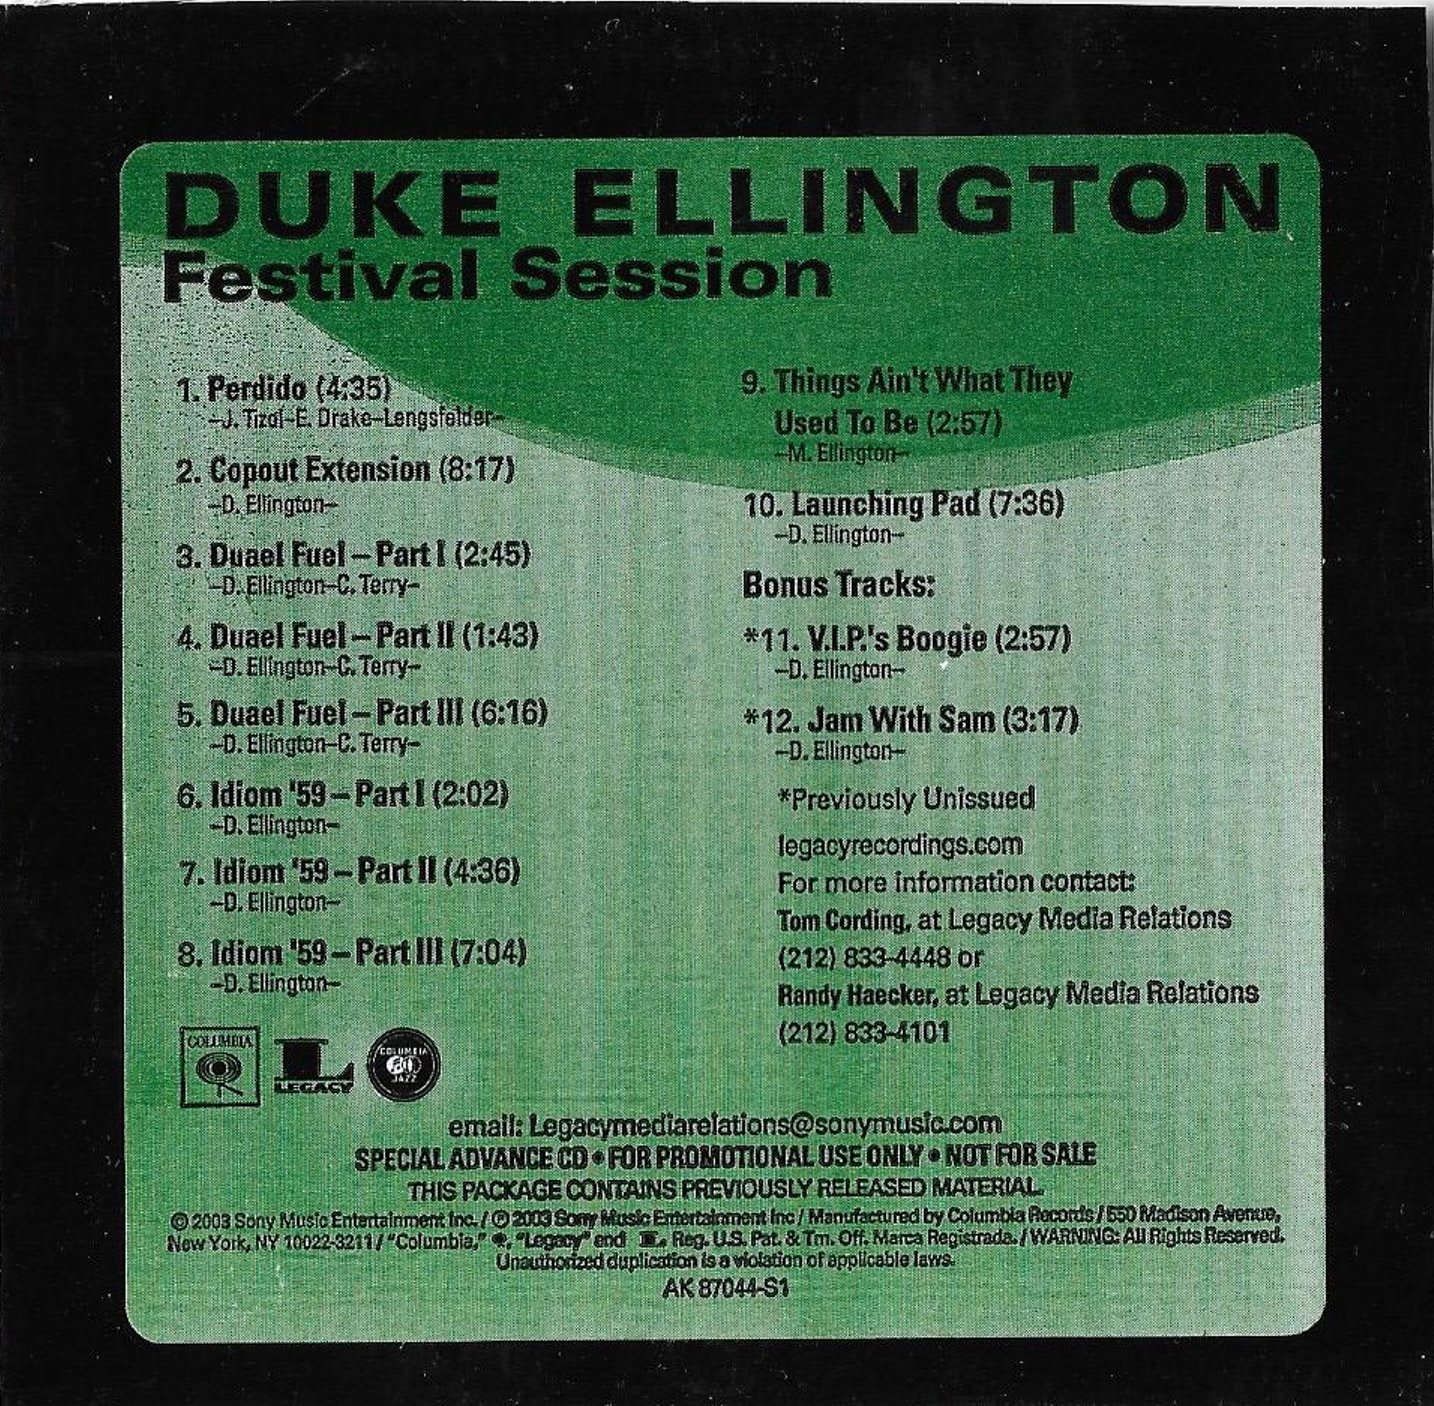 Duke Ellington: "Festival Session" - 2003 Promotional CD with 2 xtra tracks!